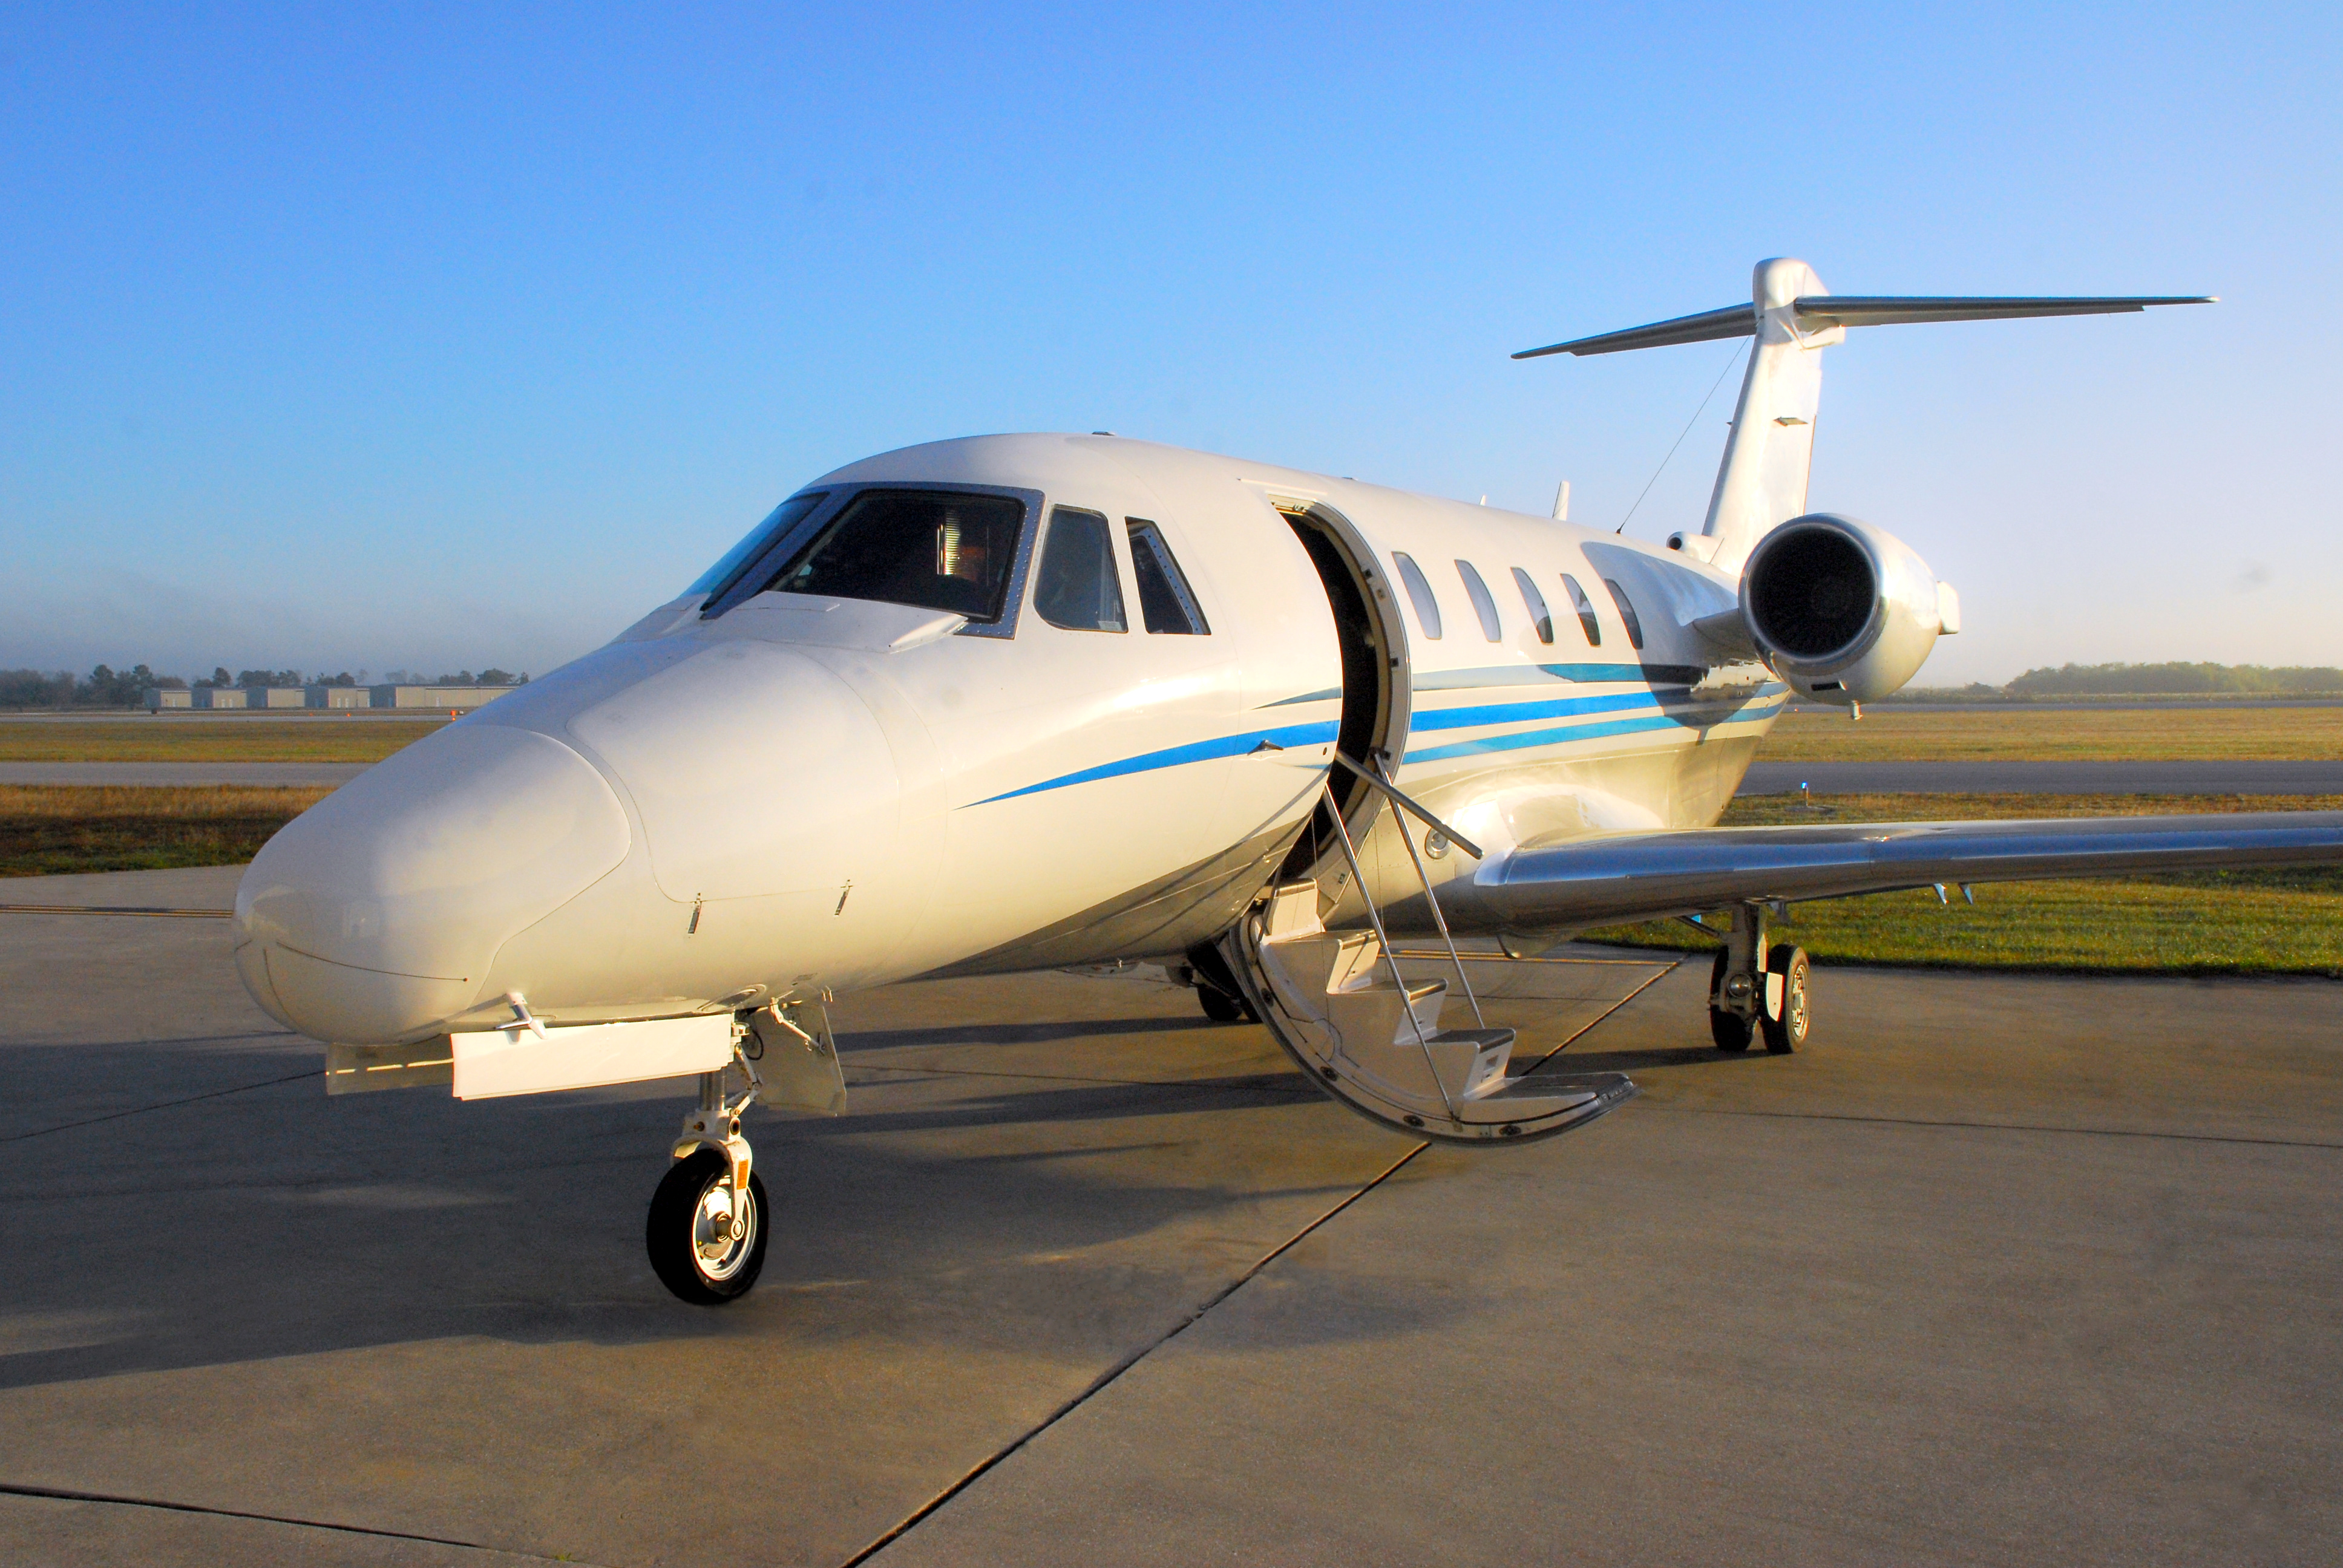 Luxury Citation VII Aircraft - Newly Added